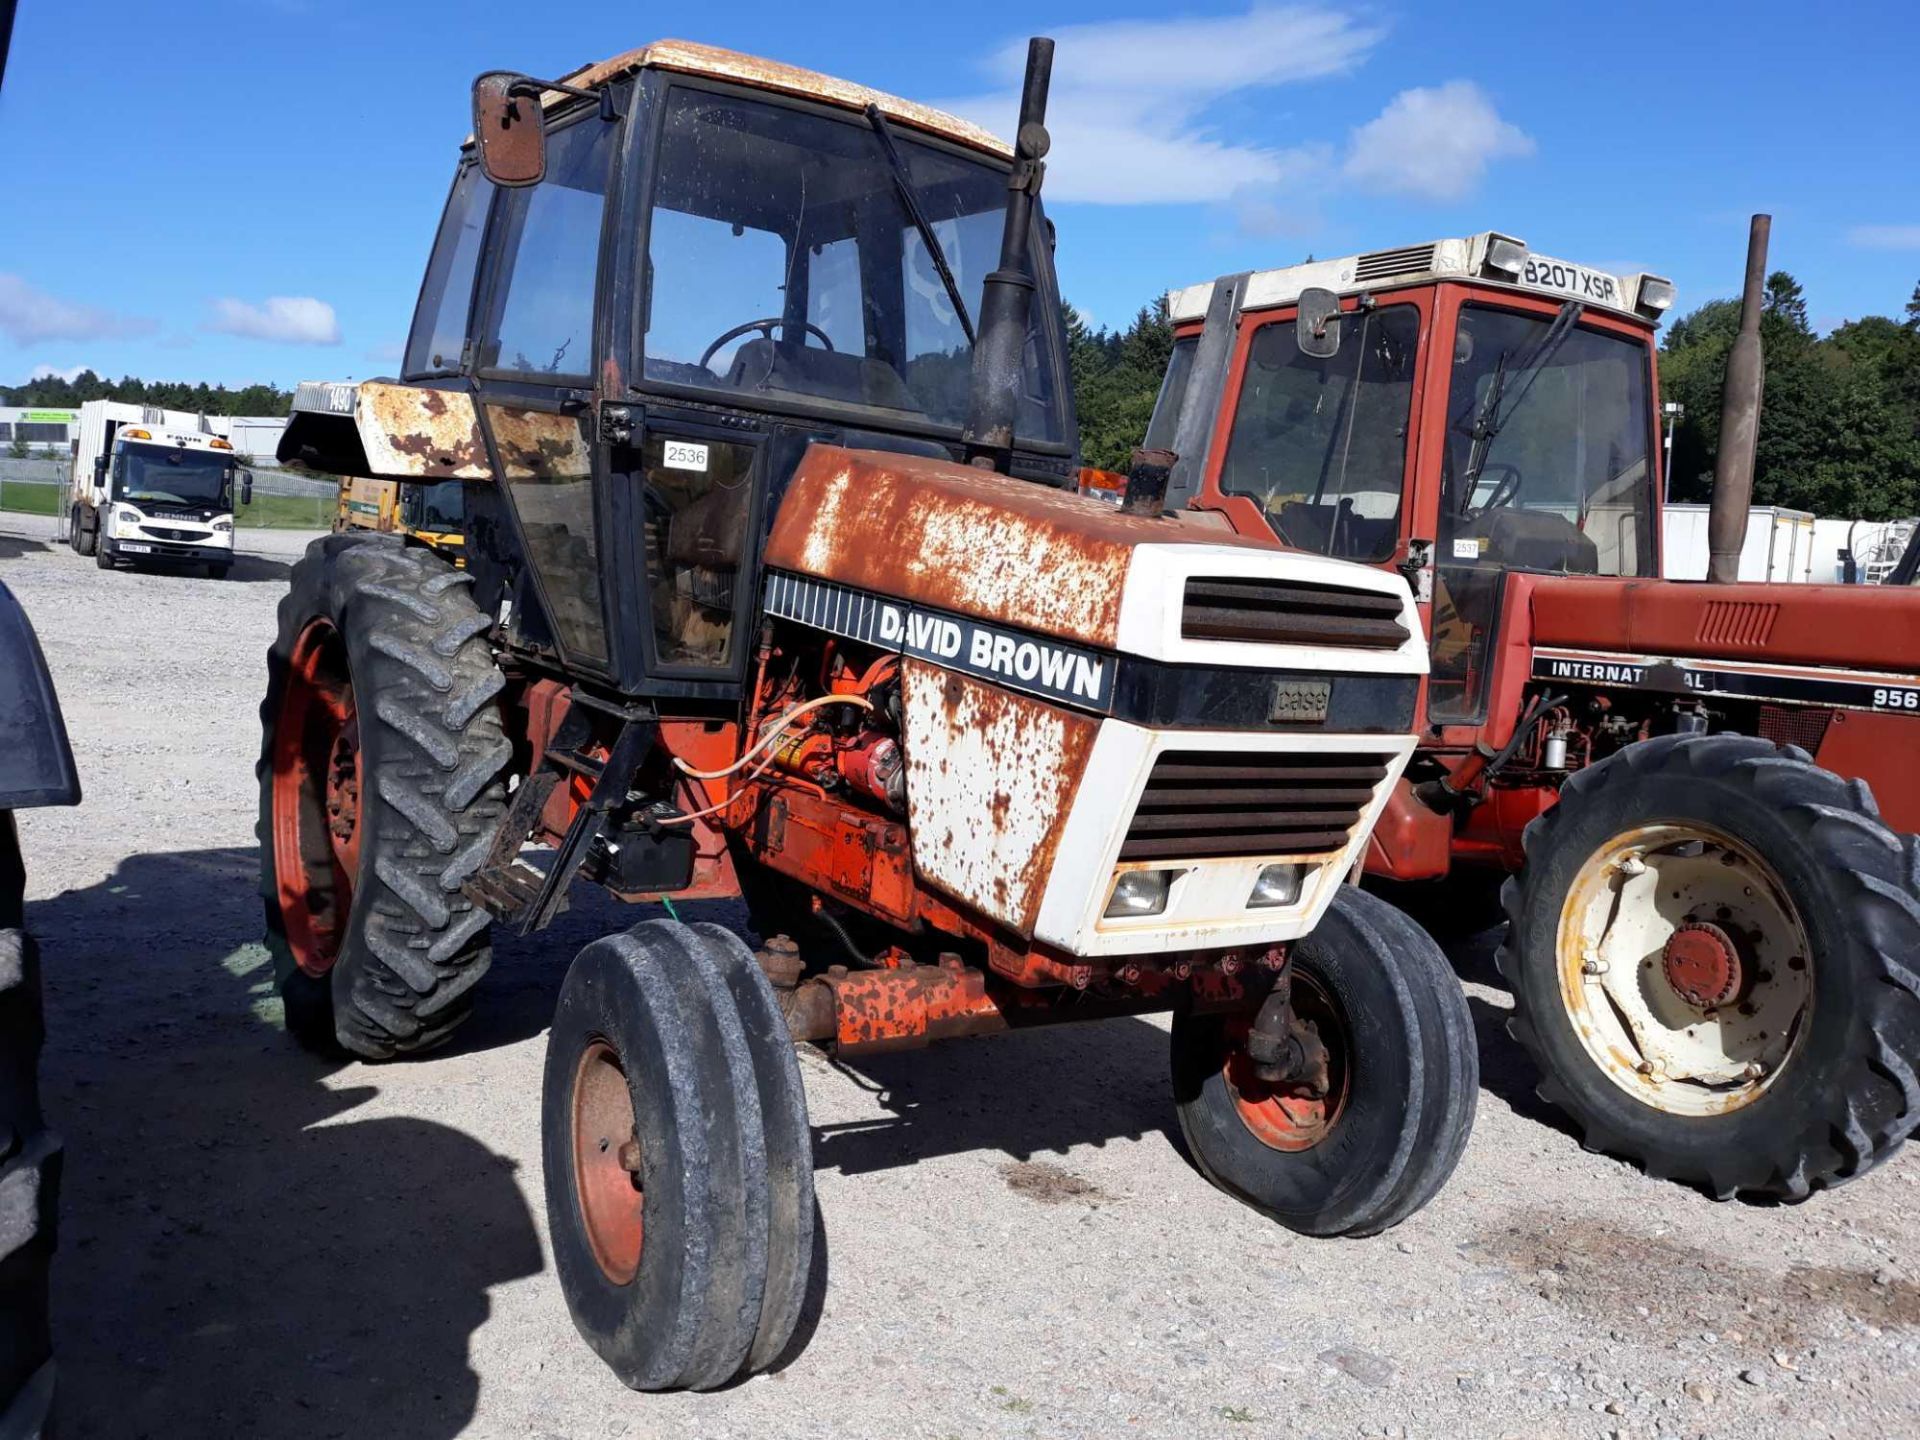 David Brown 1490 - 0cc Tractor - Image 3 of 4